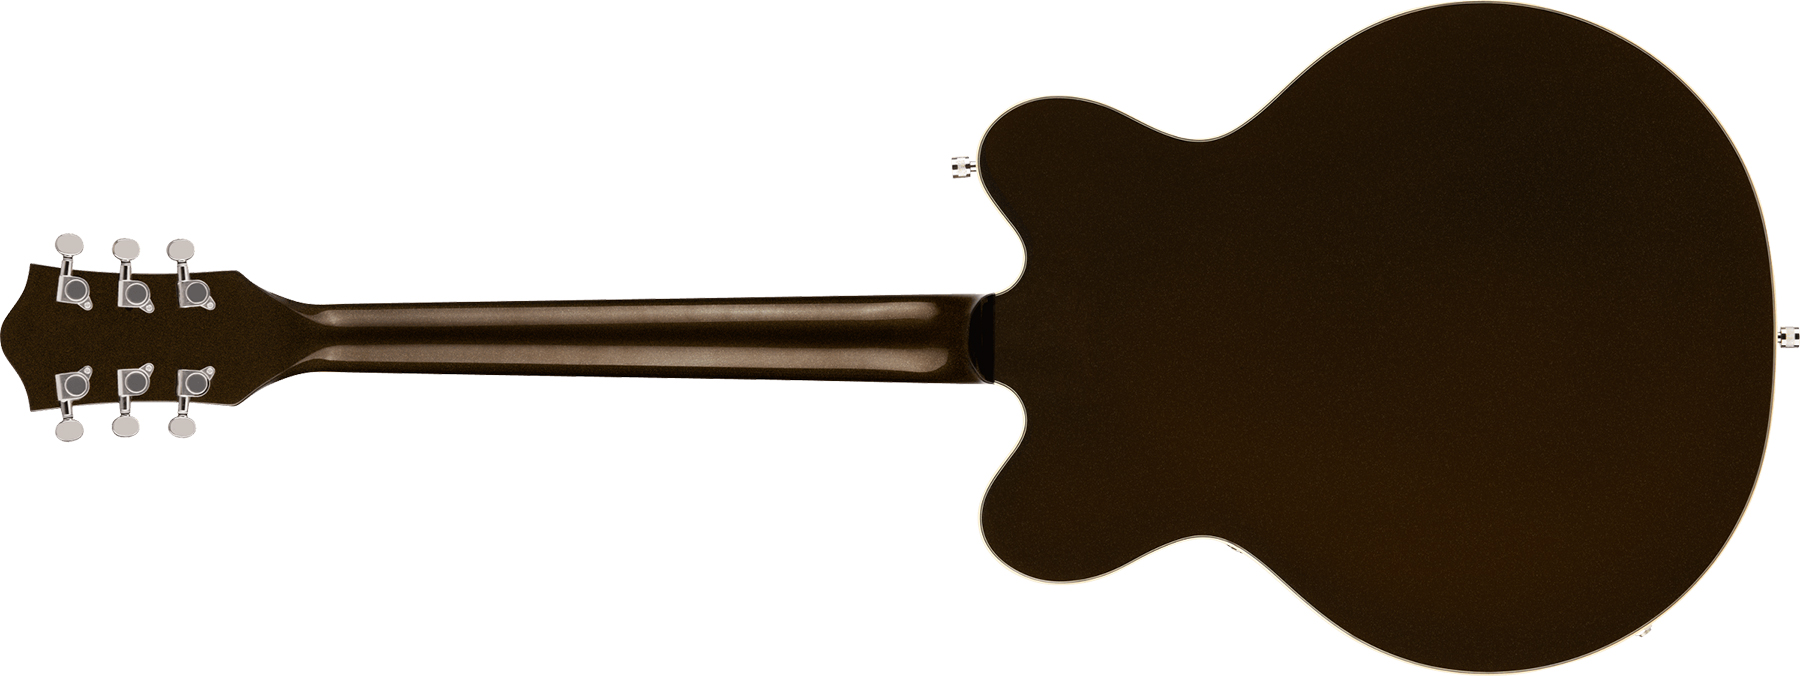 Gretsch G5622 Center Bloc Double Cut V-stoptail Electromatic Hh Ht Lau - Black Gold - Semi-Hollow E-Gitarre - Variation 1